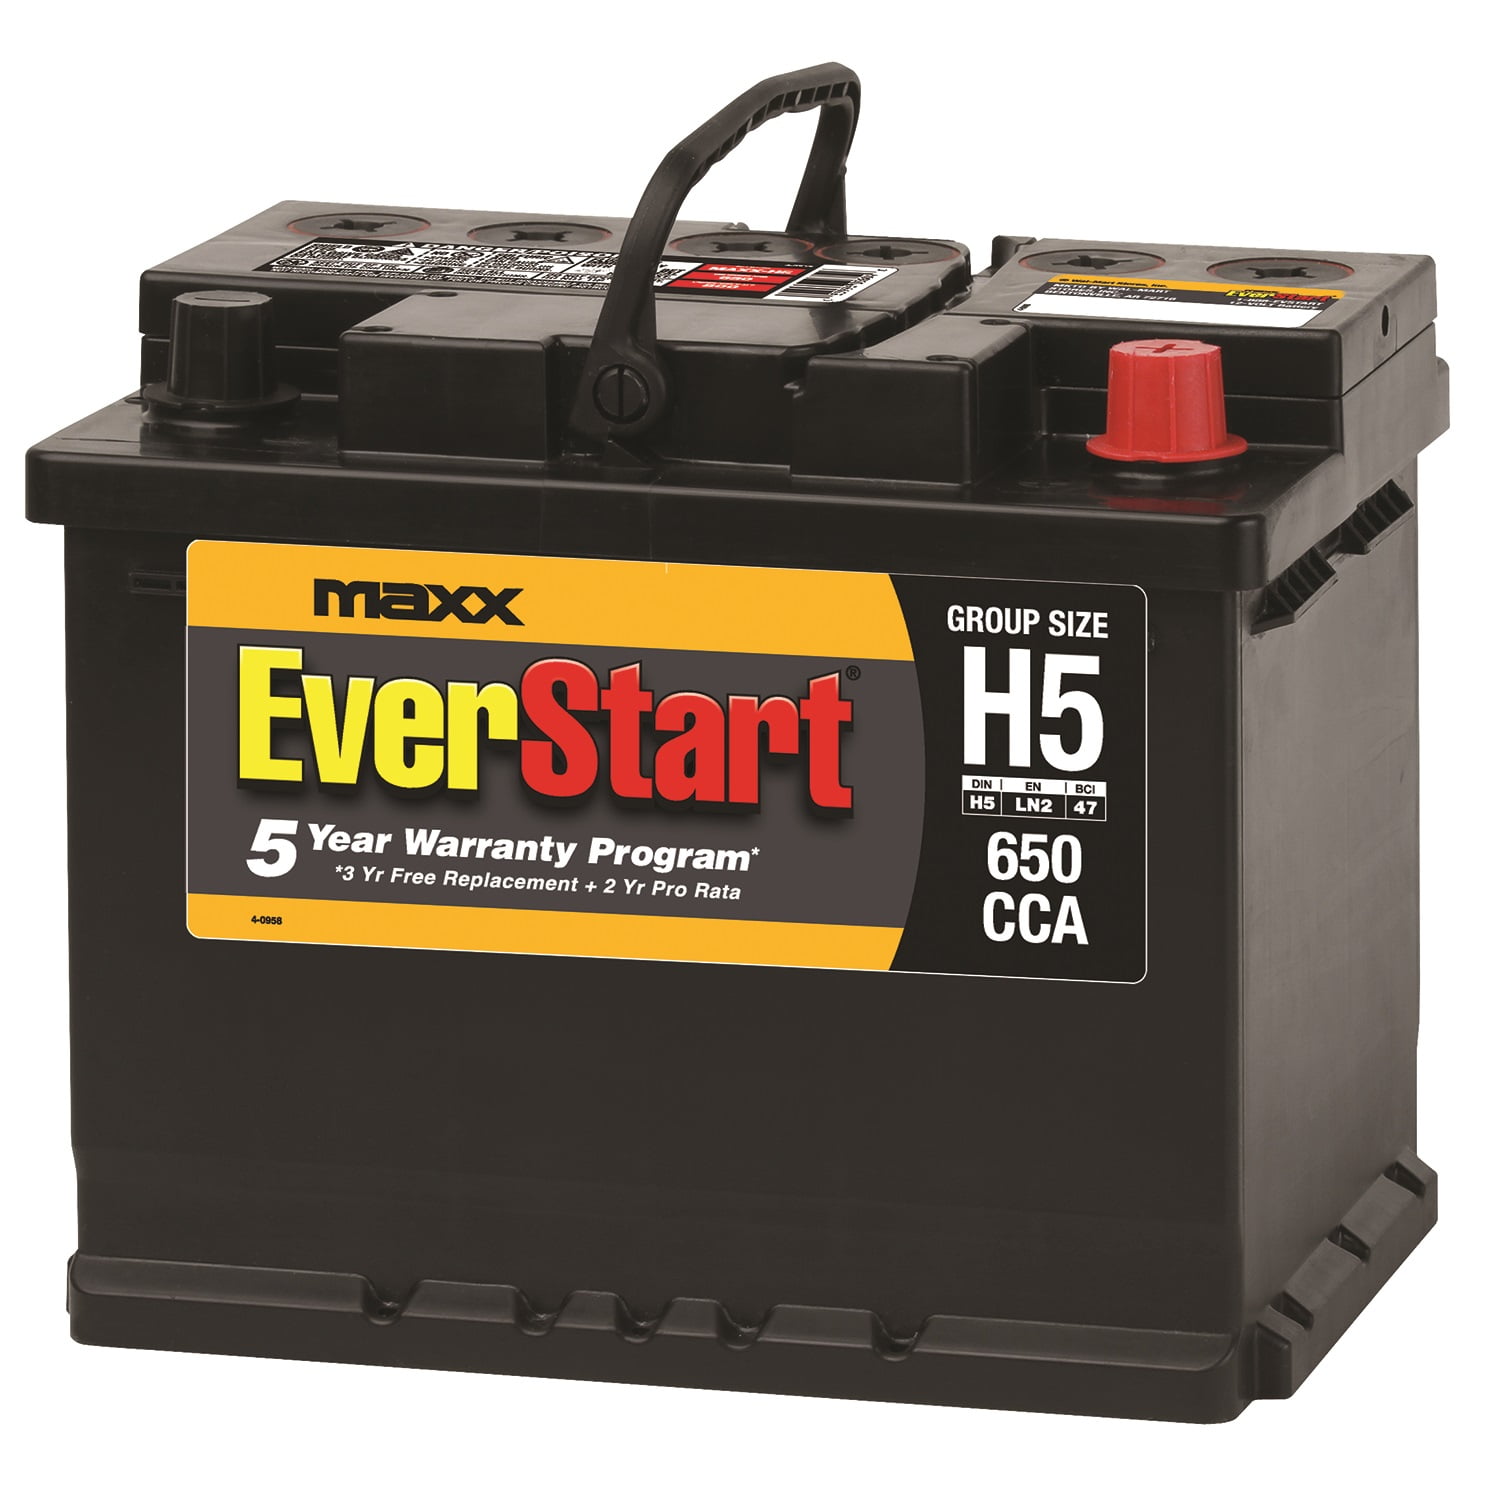 EverStart Maxx Lead Acid Automotive Battery, Group Size H5 (12 Volt/650 CCA)